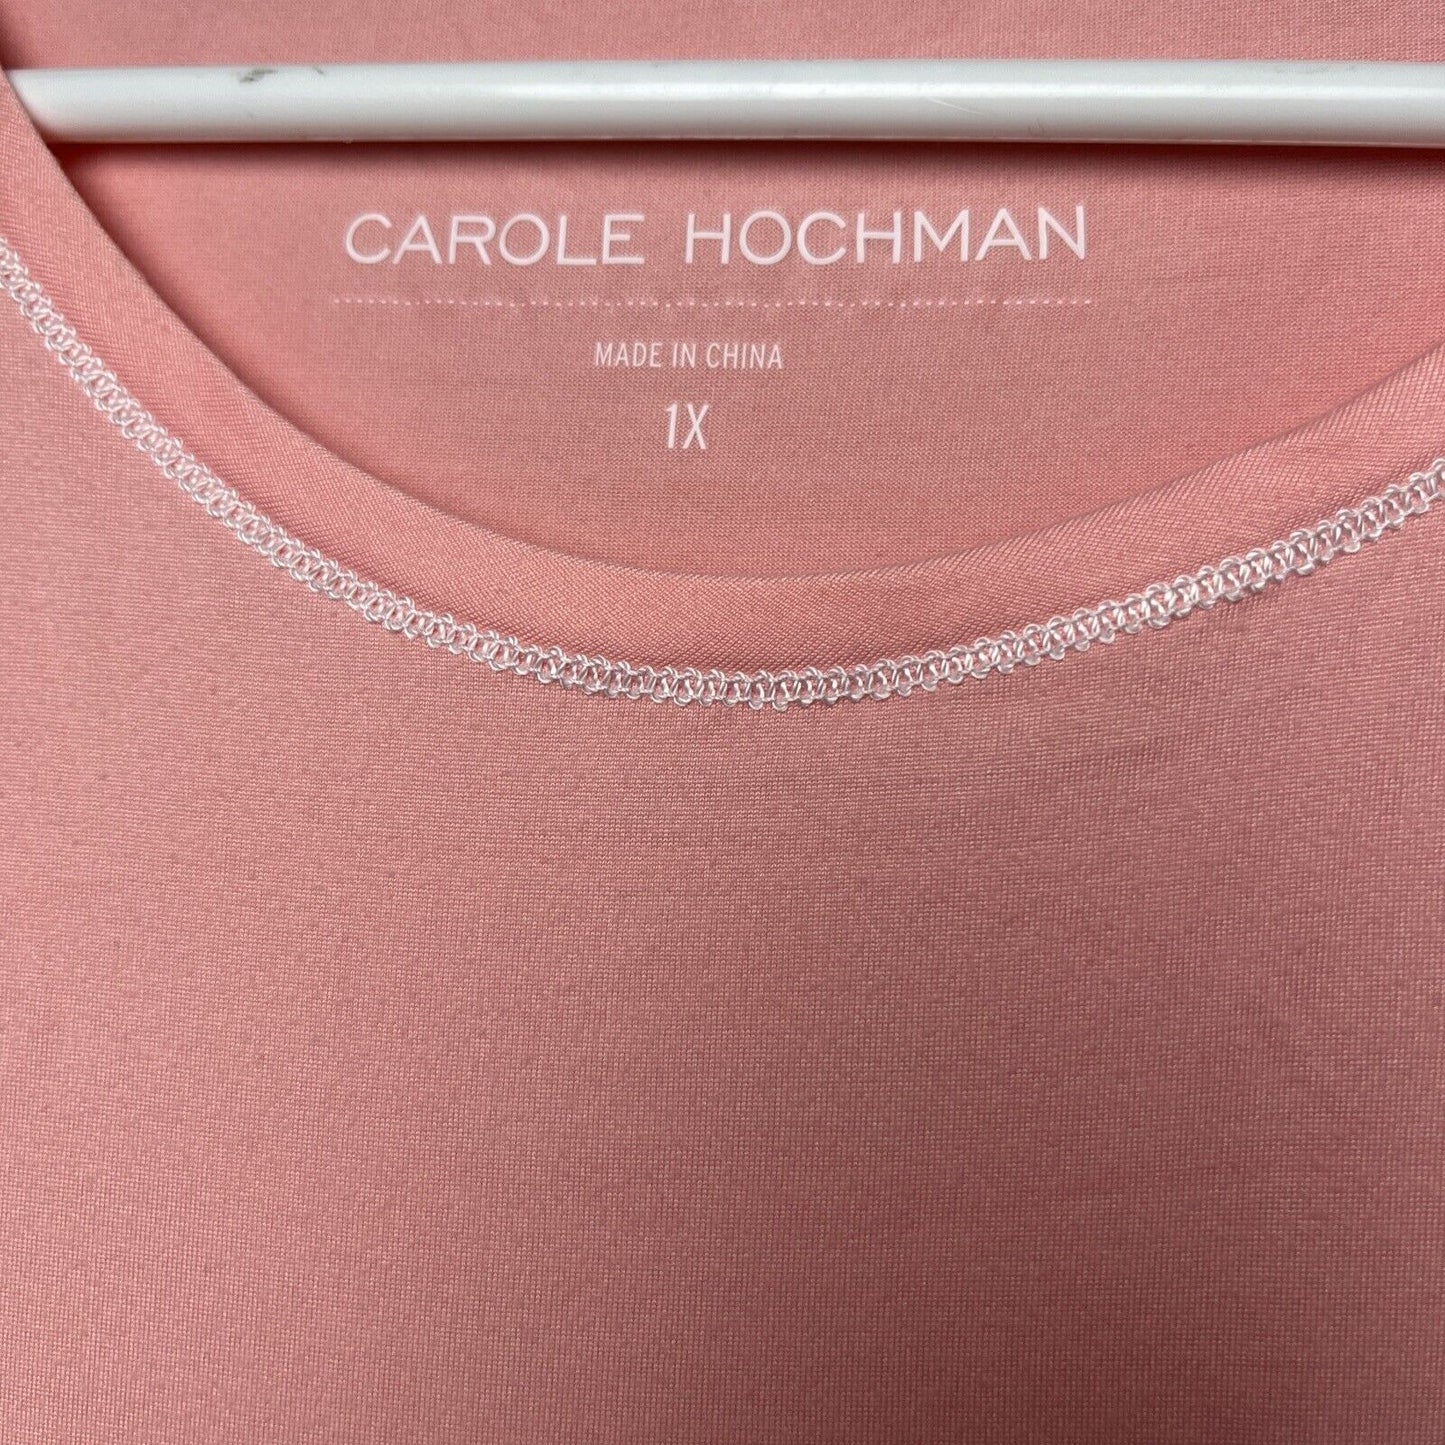 Carole Hochman Regular Feather Soft 3-Piece Sleep Set Pink 1X A469060